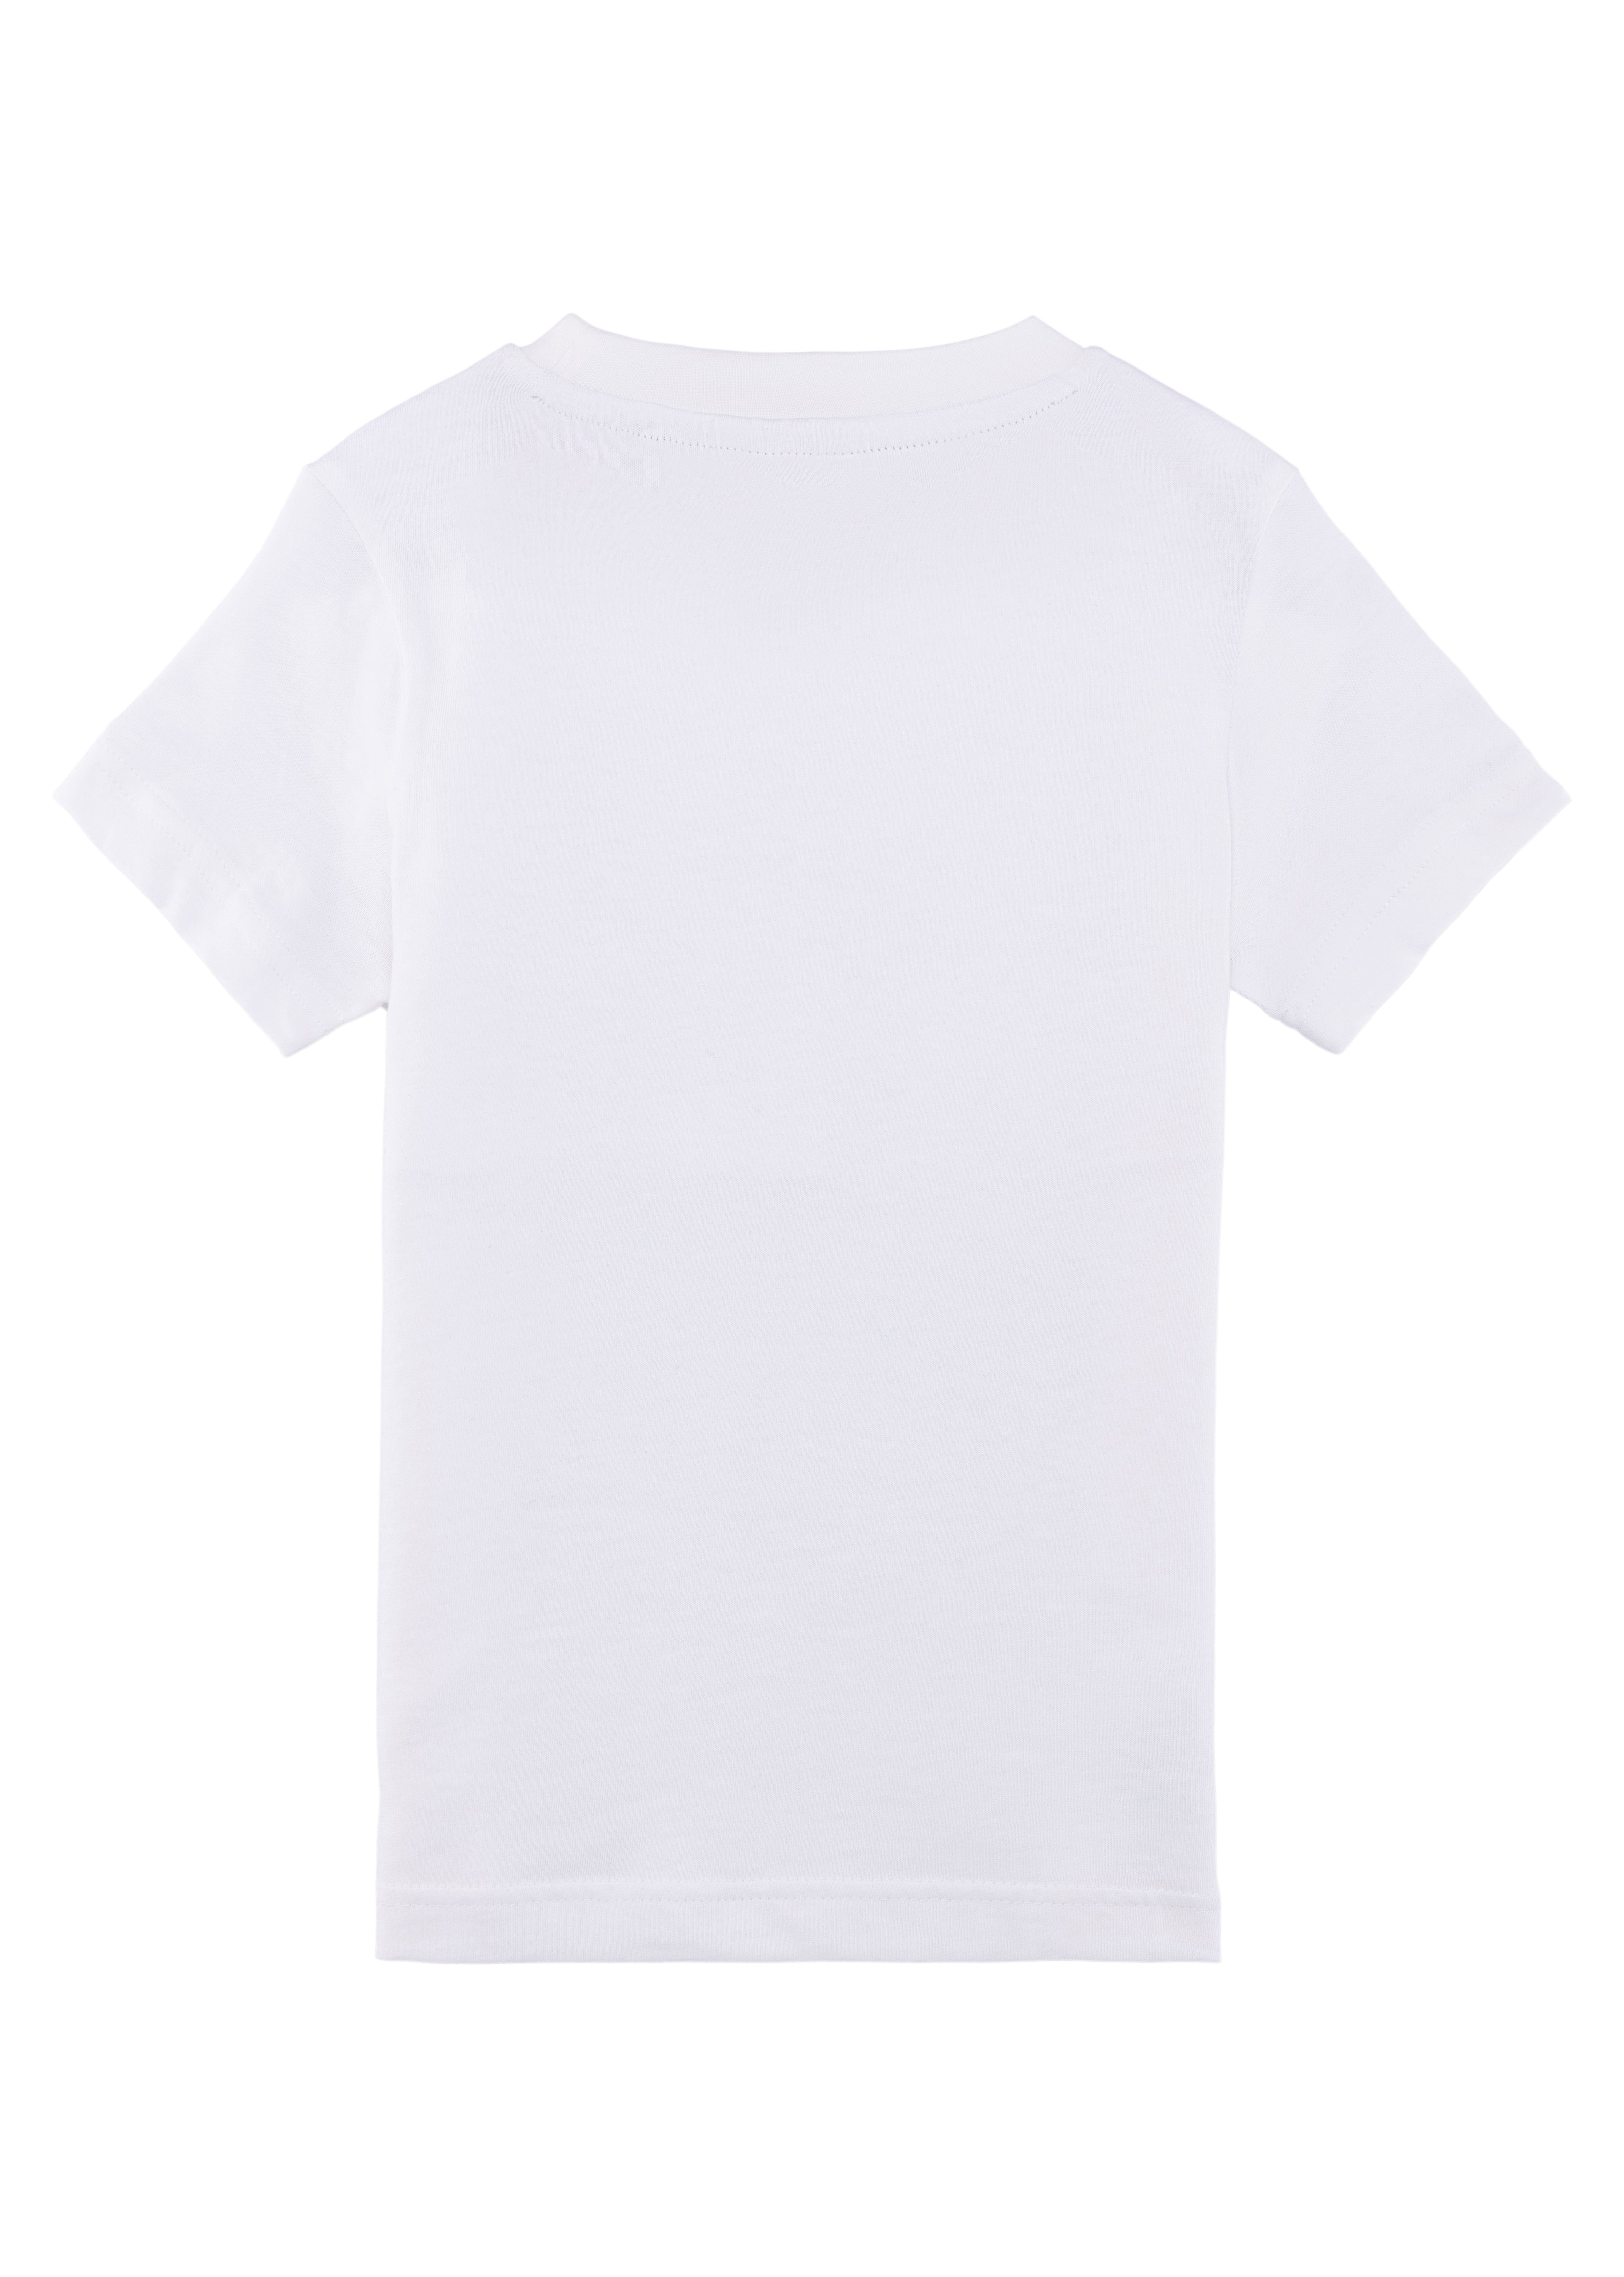 Lacoste T-Shirt mit WHITE Brusthöhe auf Lacoste-Krokodil